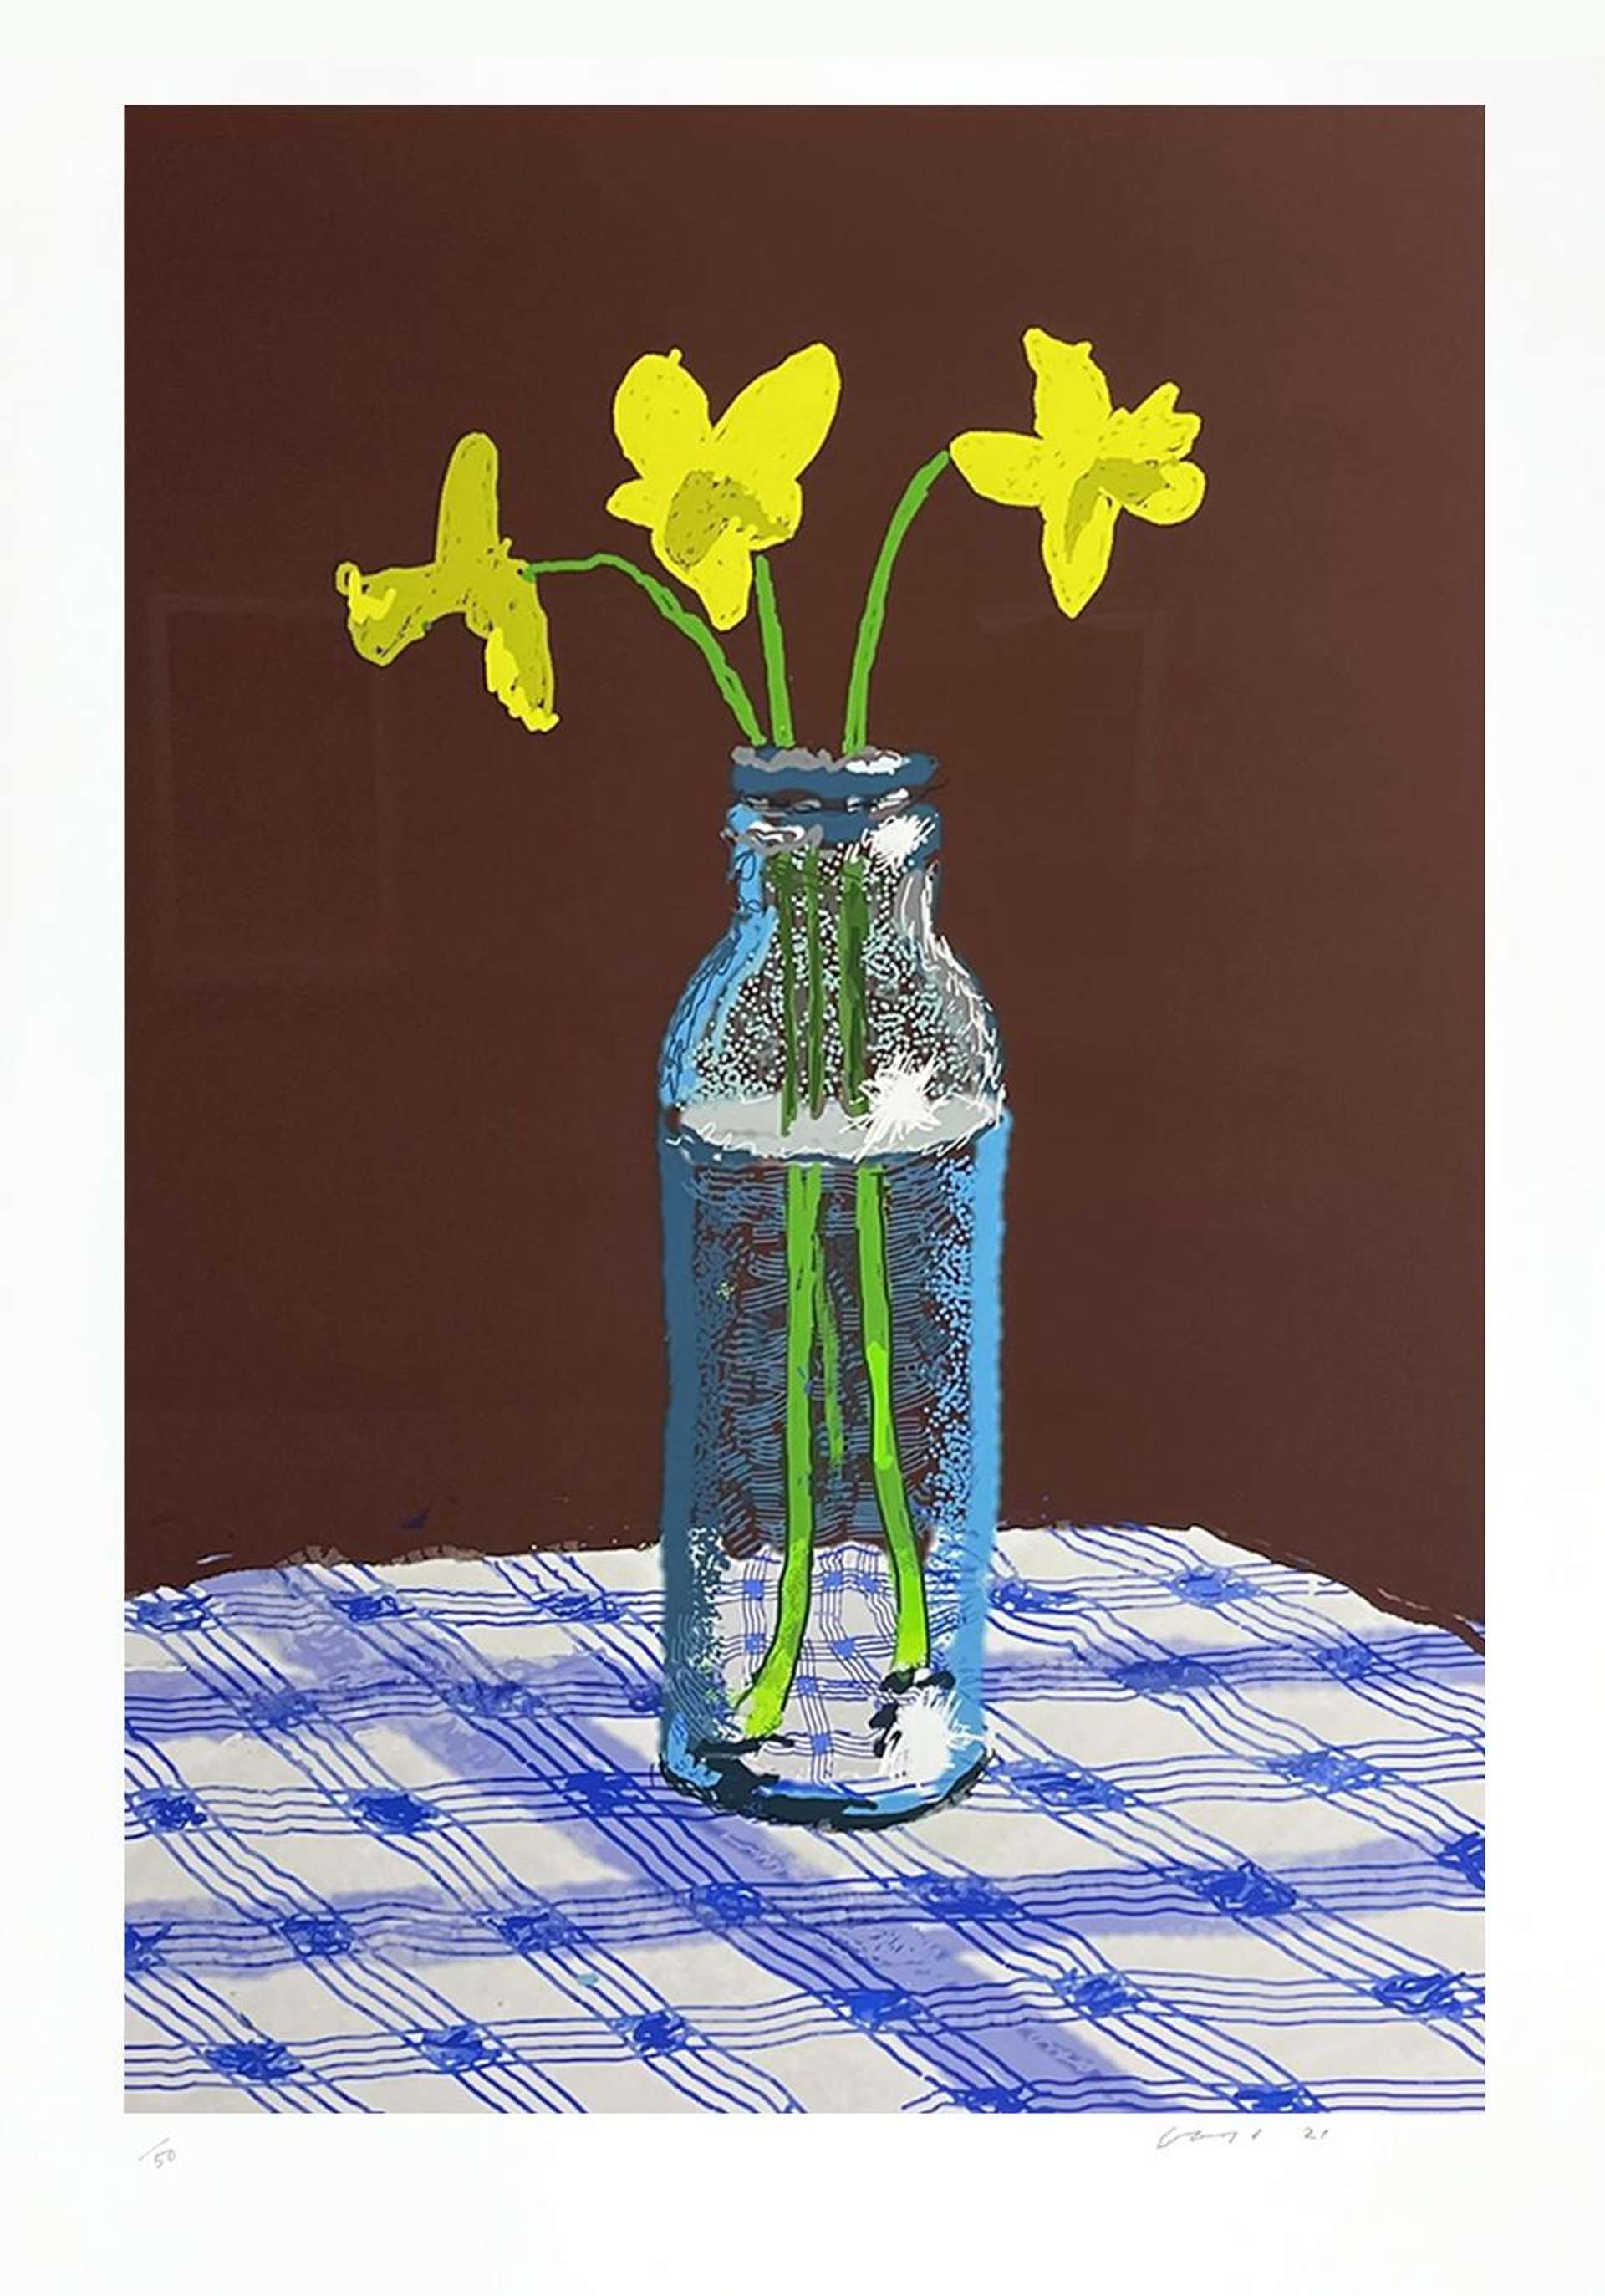 7th April 2021, Three Daffodils In A Bottle - Signed Print by David Hockney 2021 - MyArtBroker